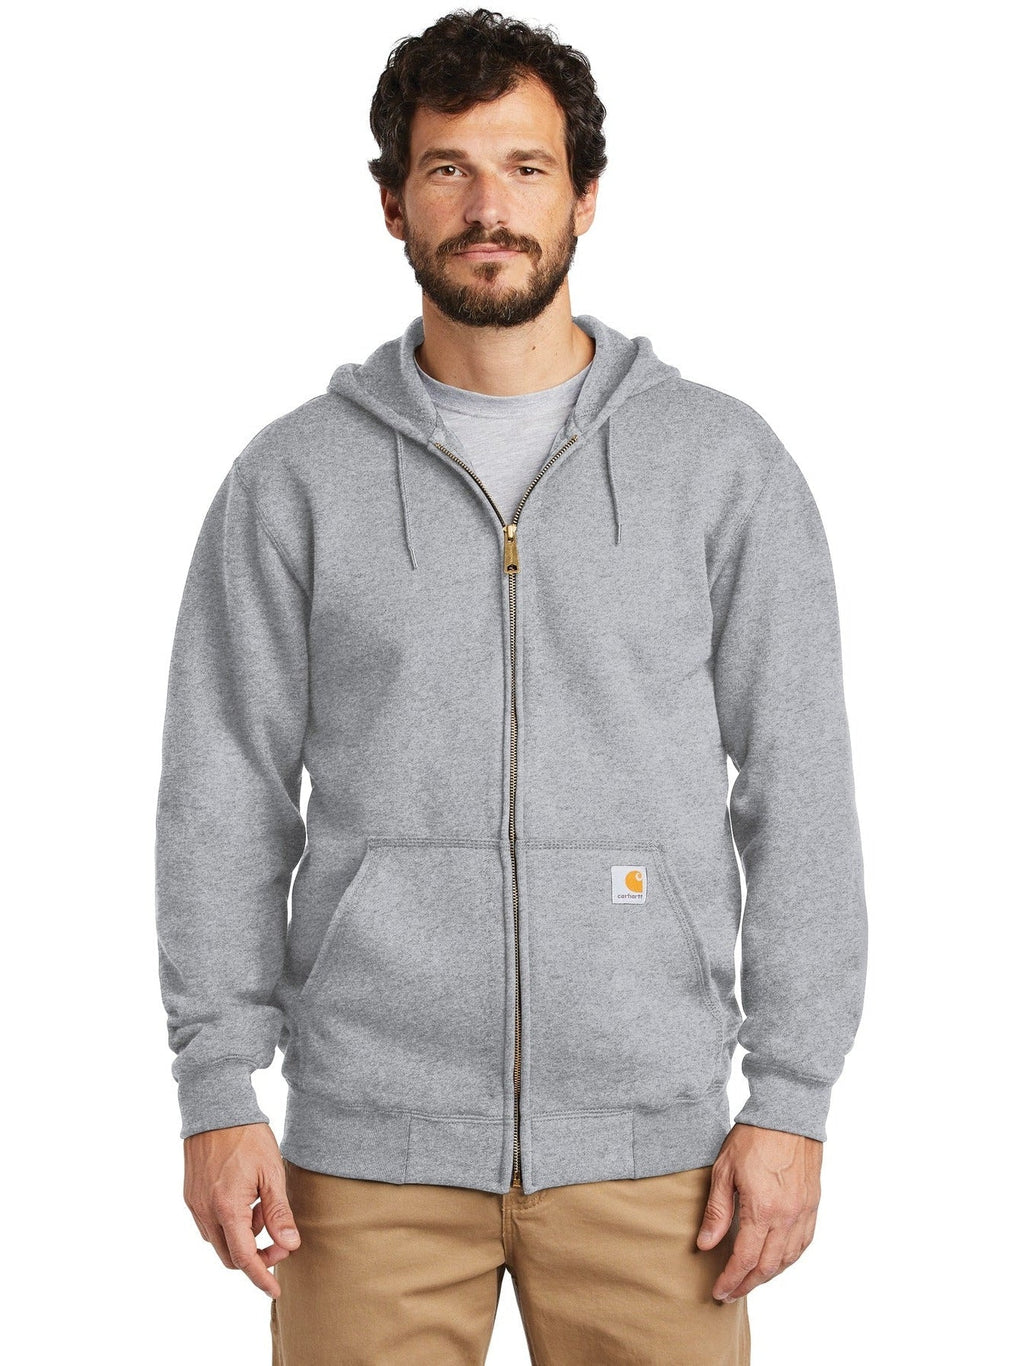 Carhartt CTK122 Full-Zip Sweatshirt with Custom Embroidery